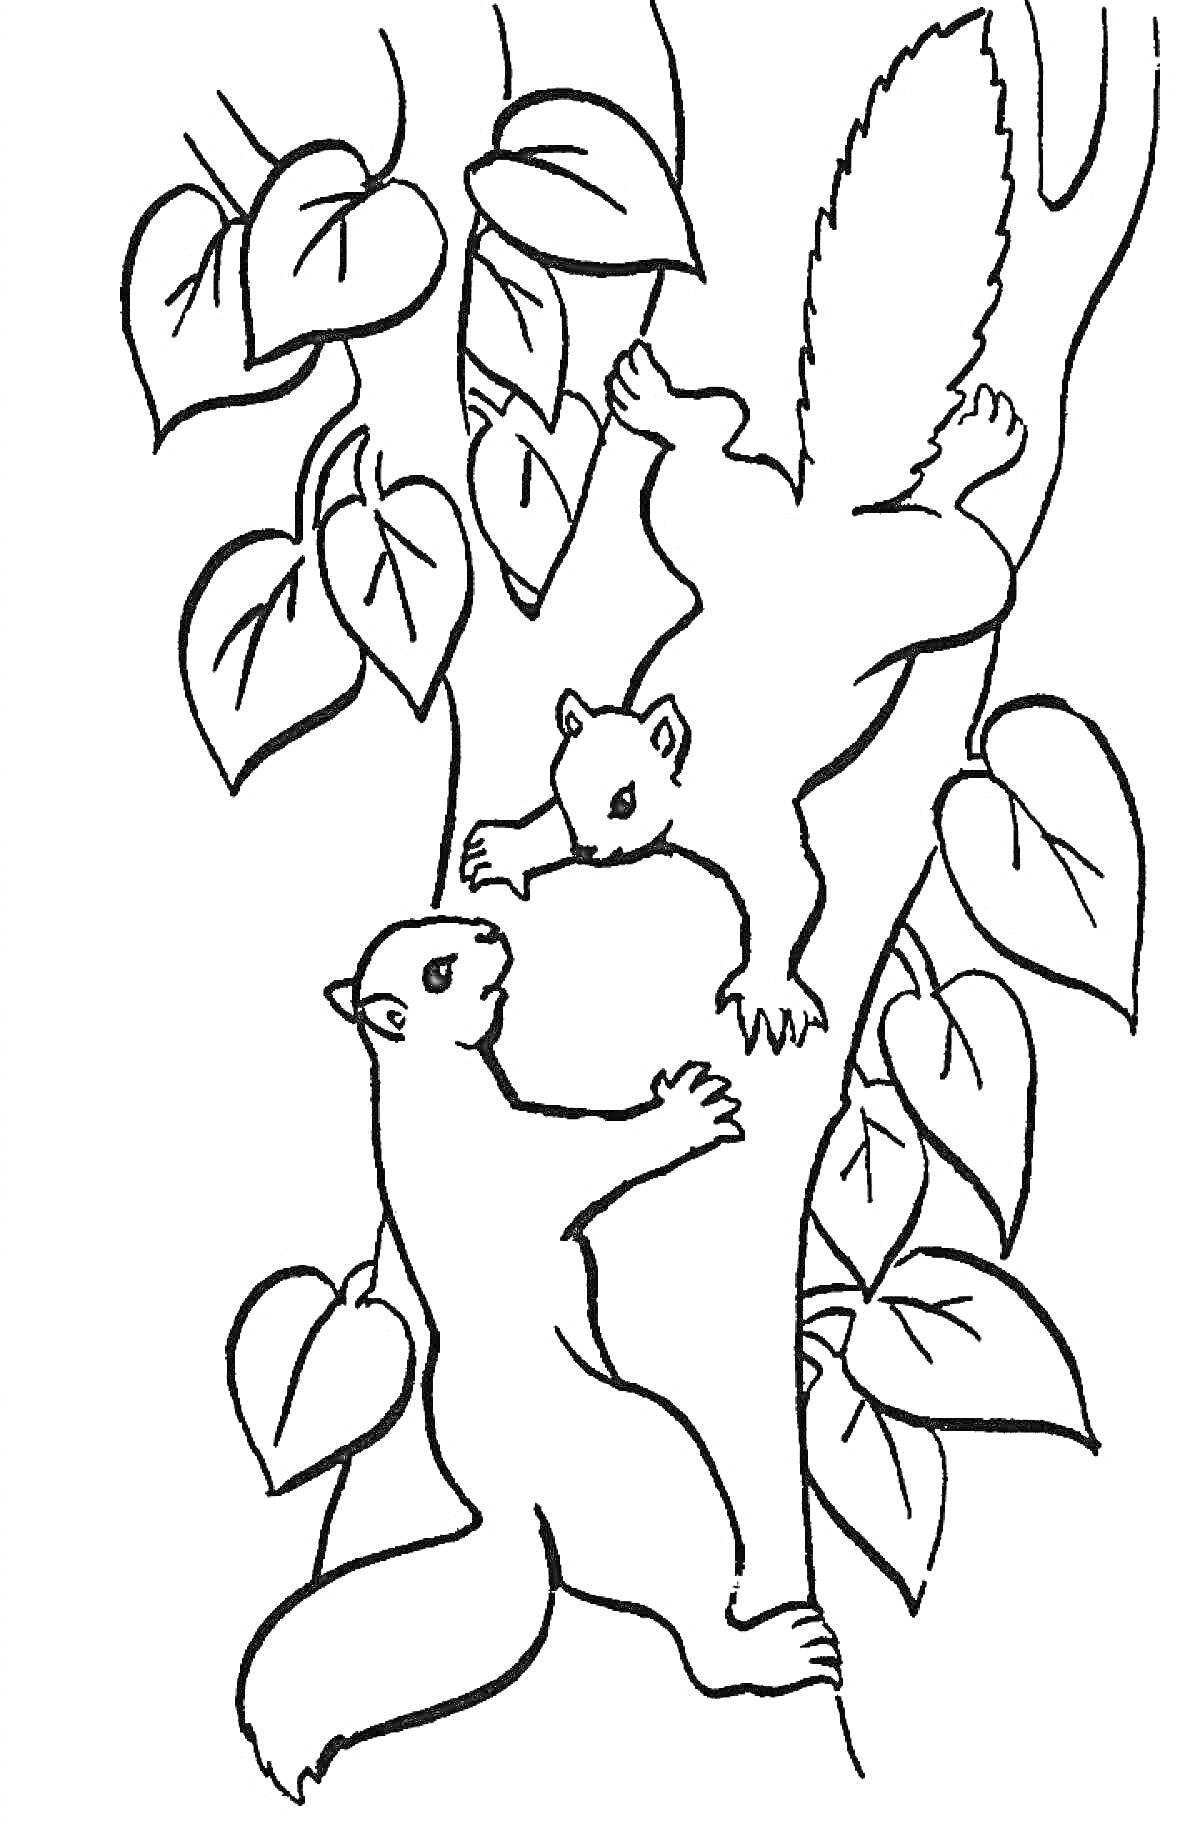 Раскраска Две белки на дереве с листьями